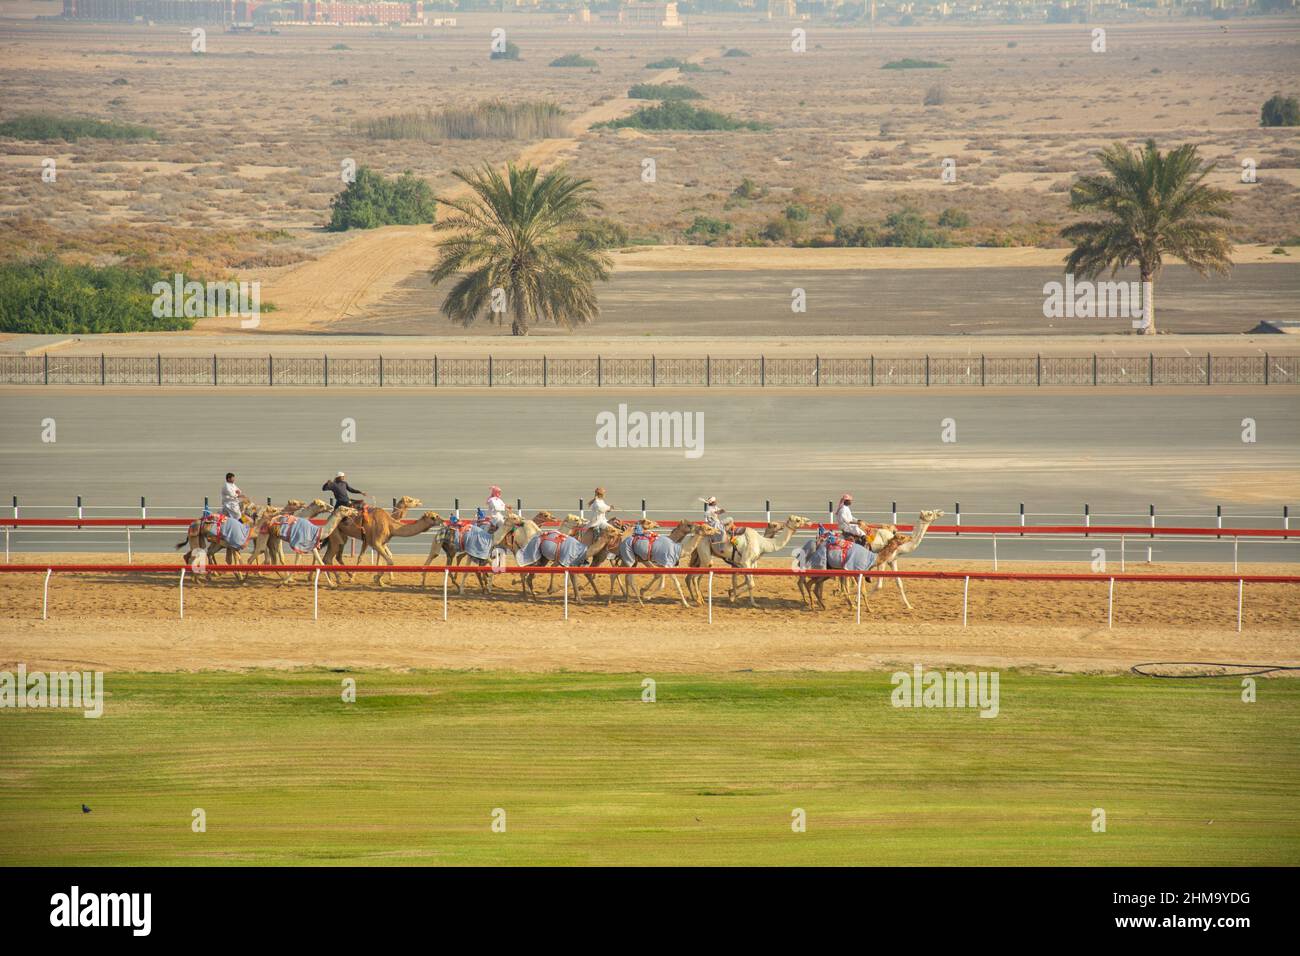 Afghan and Pakistani camel jockeys on the training for the camel race in Al Wathbah,  Abu Dhabi Stock Photo